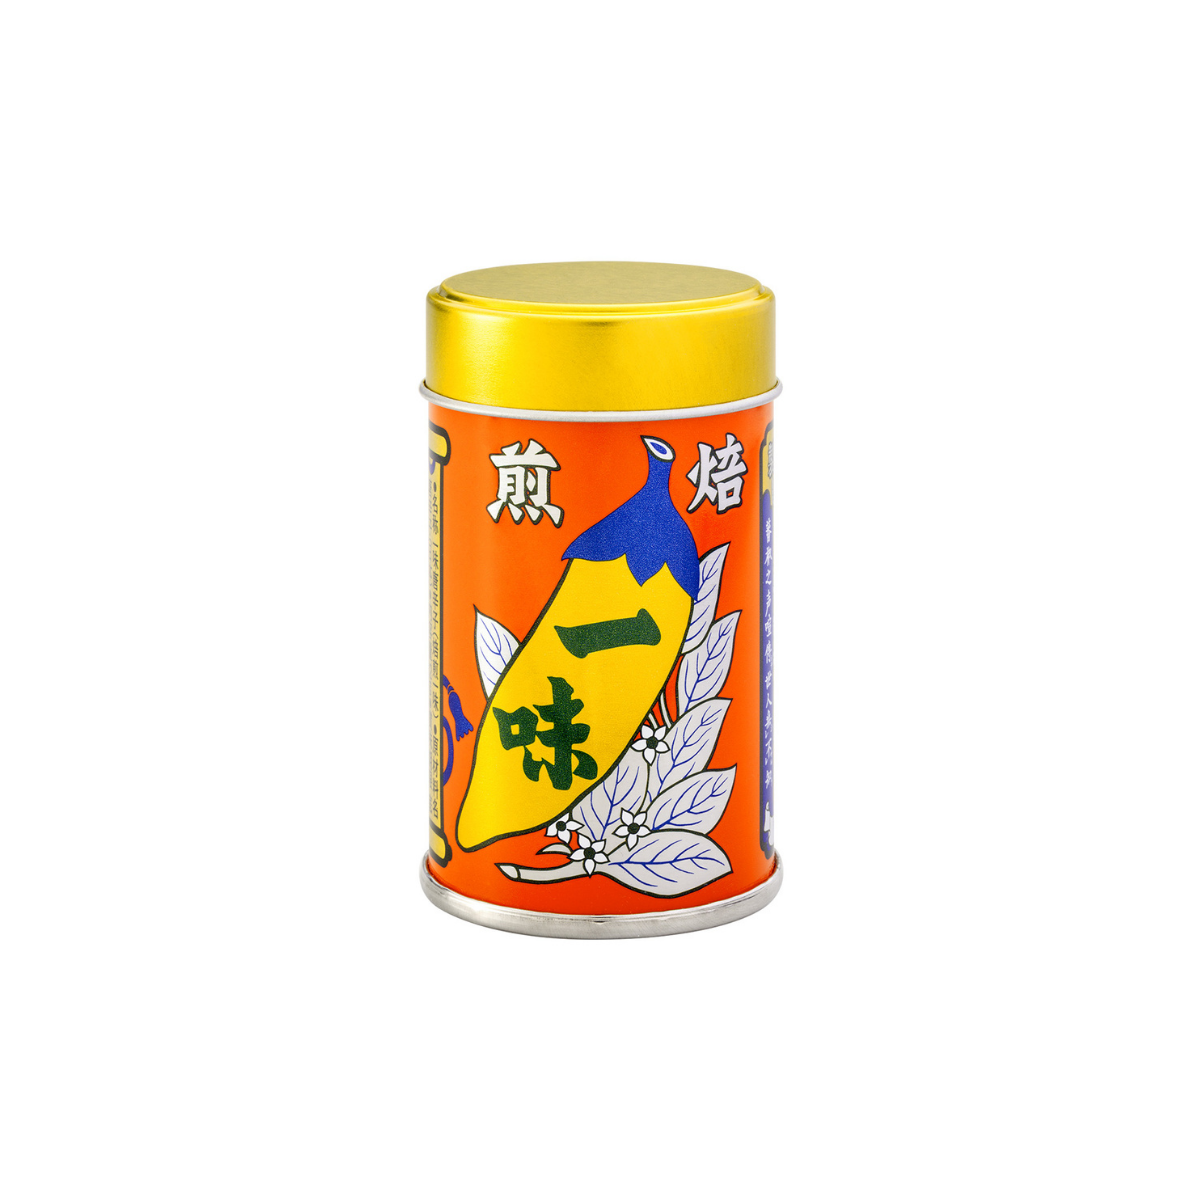 Ichimi Togarashi (Japanese Red Chili Pepper Powder) - Space Camp